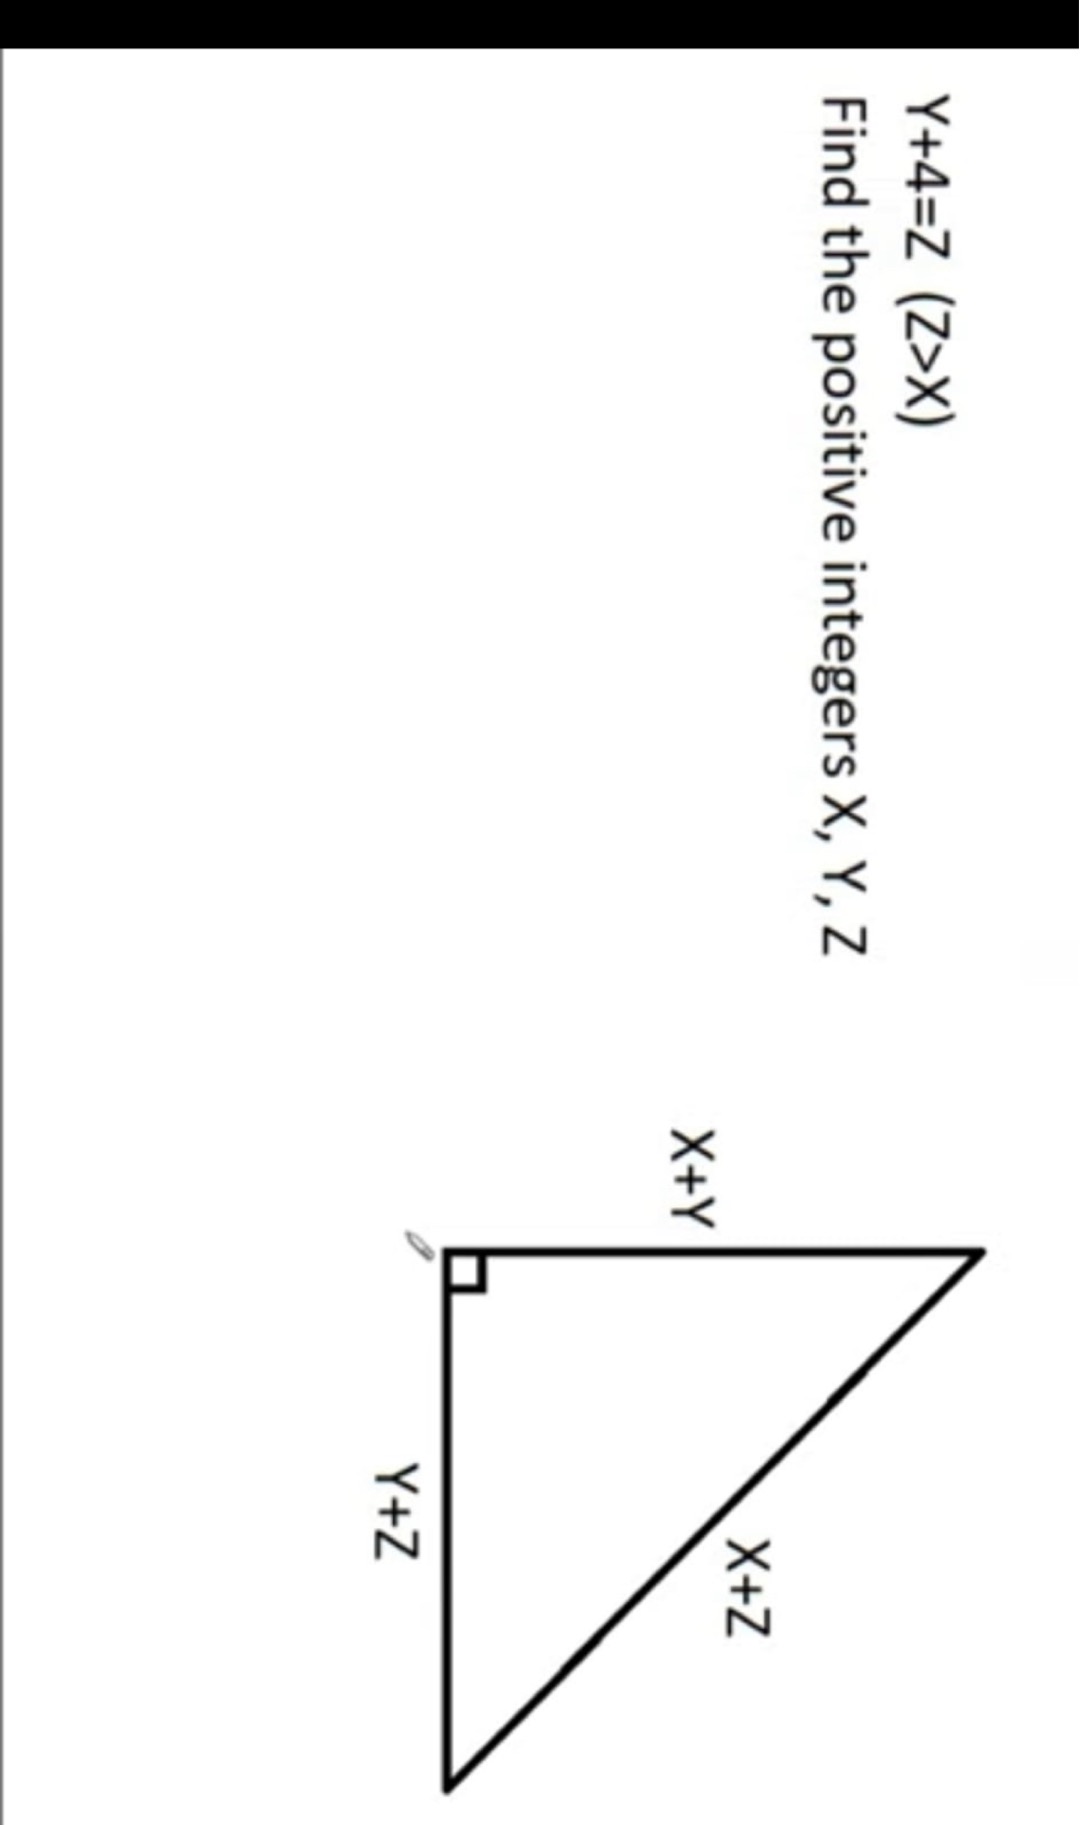 Y+4=Z(Z>X)
Find the positive integers X,Y,Z
